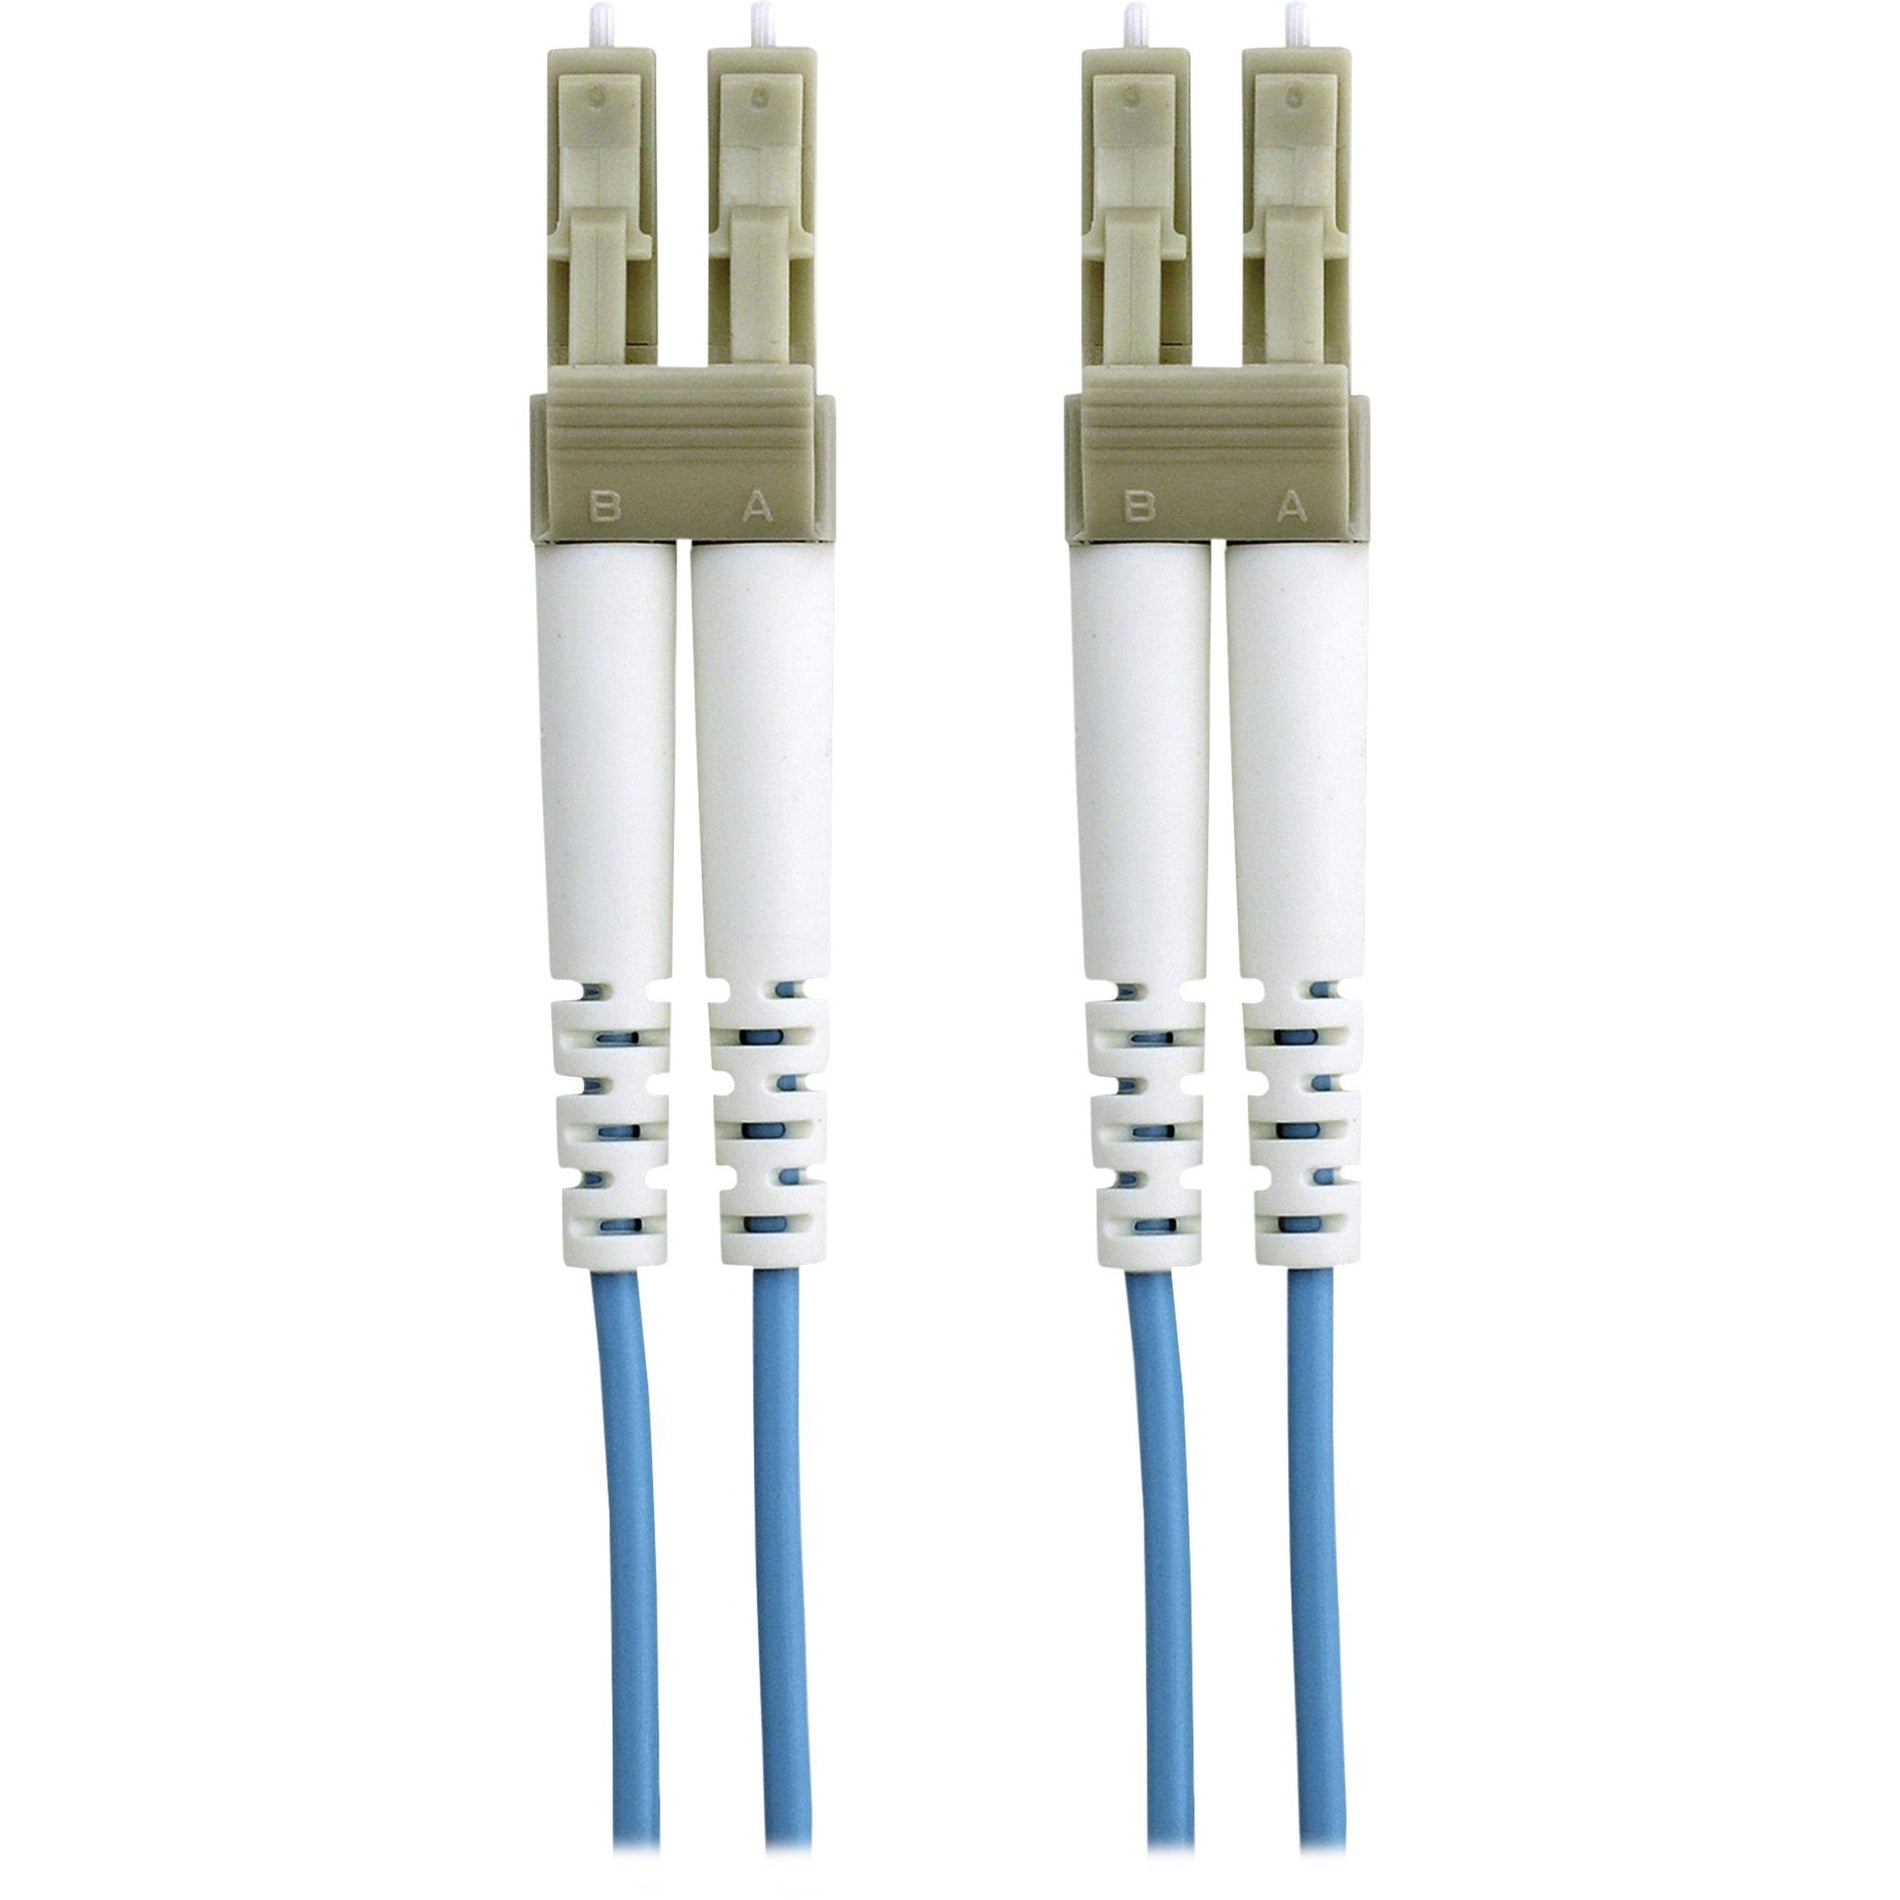 Belkin F2F402LL-01M-G 10GB Aqua Fiber Optic Cable 3.28 ft Multi-mode Patch Cable  Belkin Câble Optique Aqua 10GB F2F402LL-01M-G Fibre 1 m Multimode Câble de Raccordement